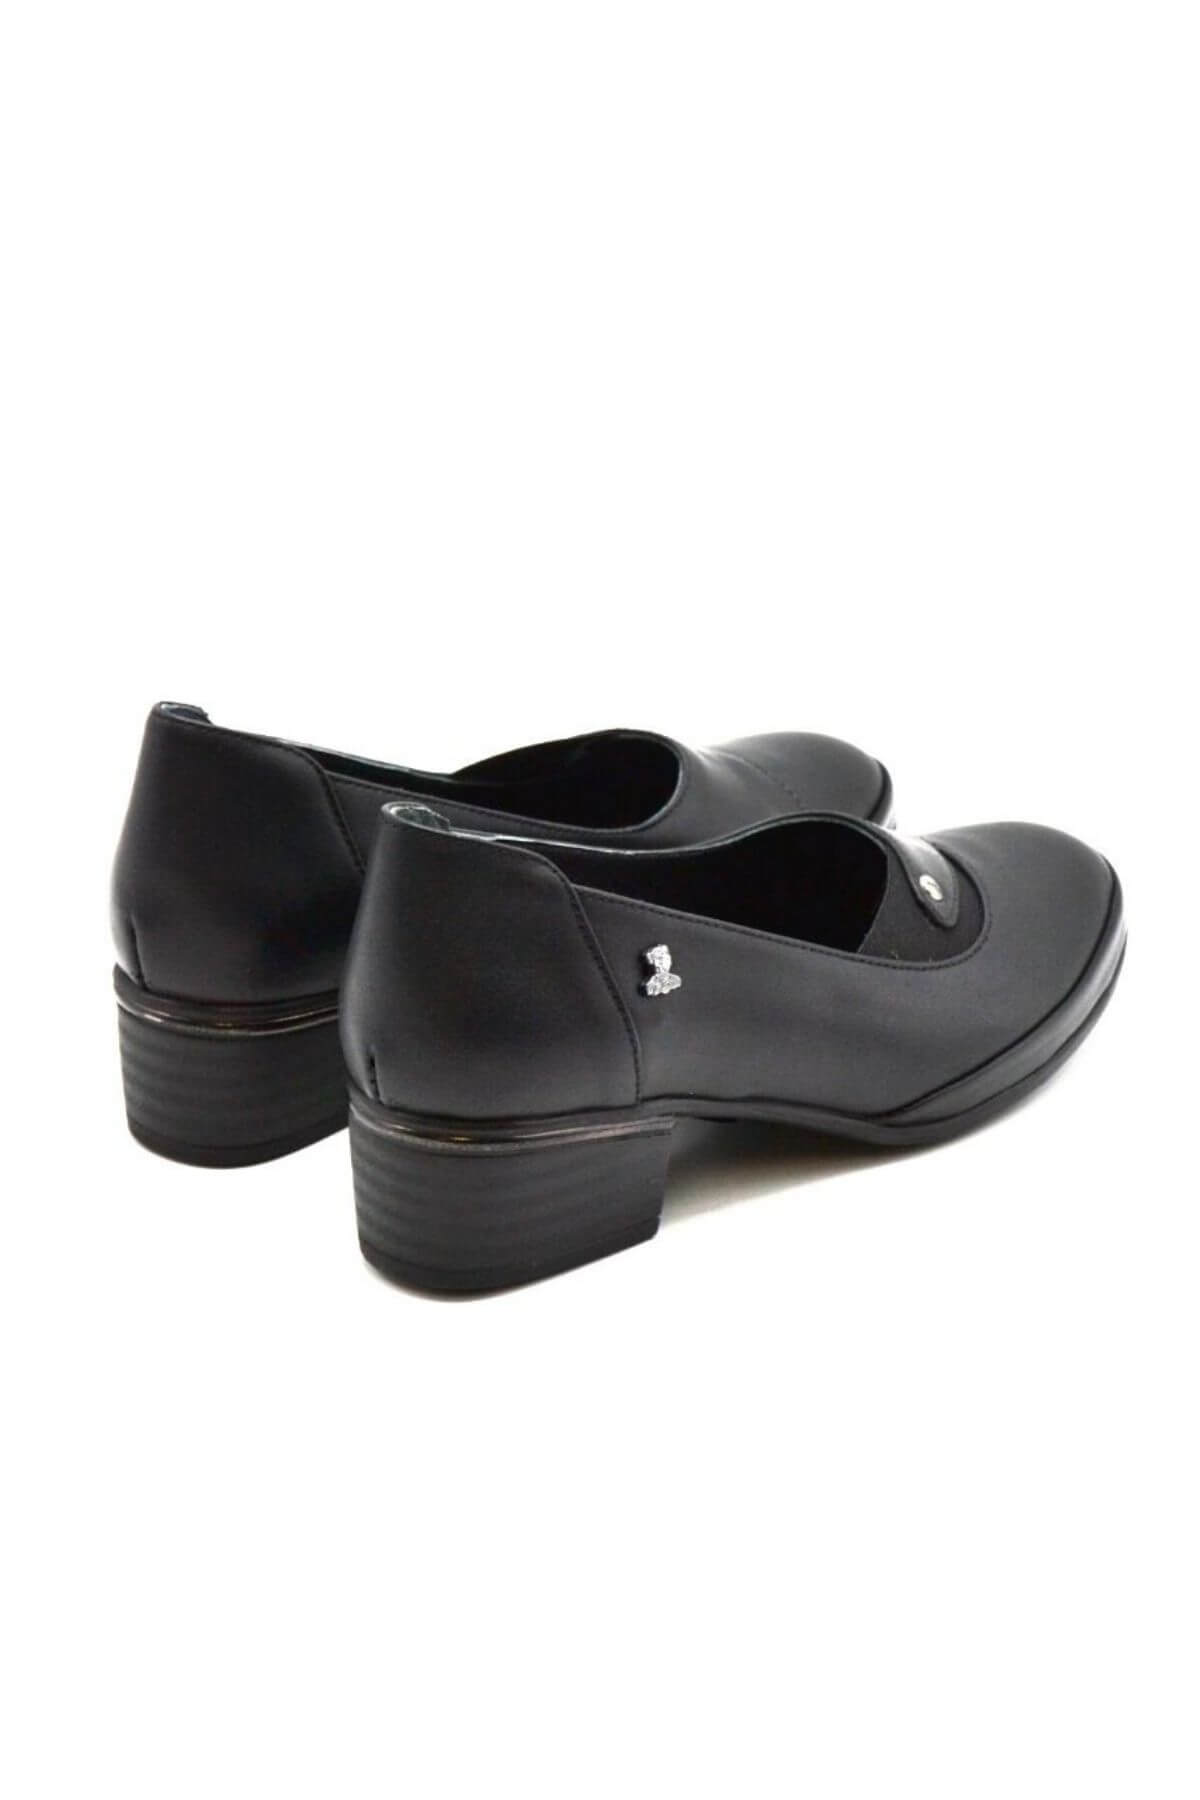 Kadın Topuklu Deri Ayakkabı Siyah 2312515K - Thumbnail